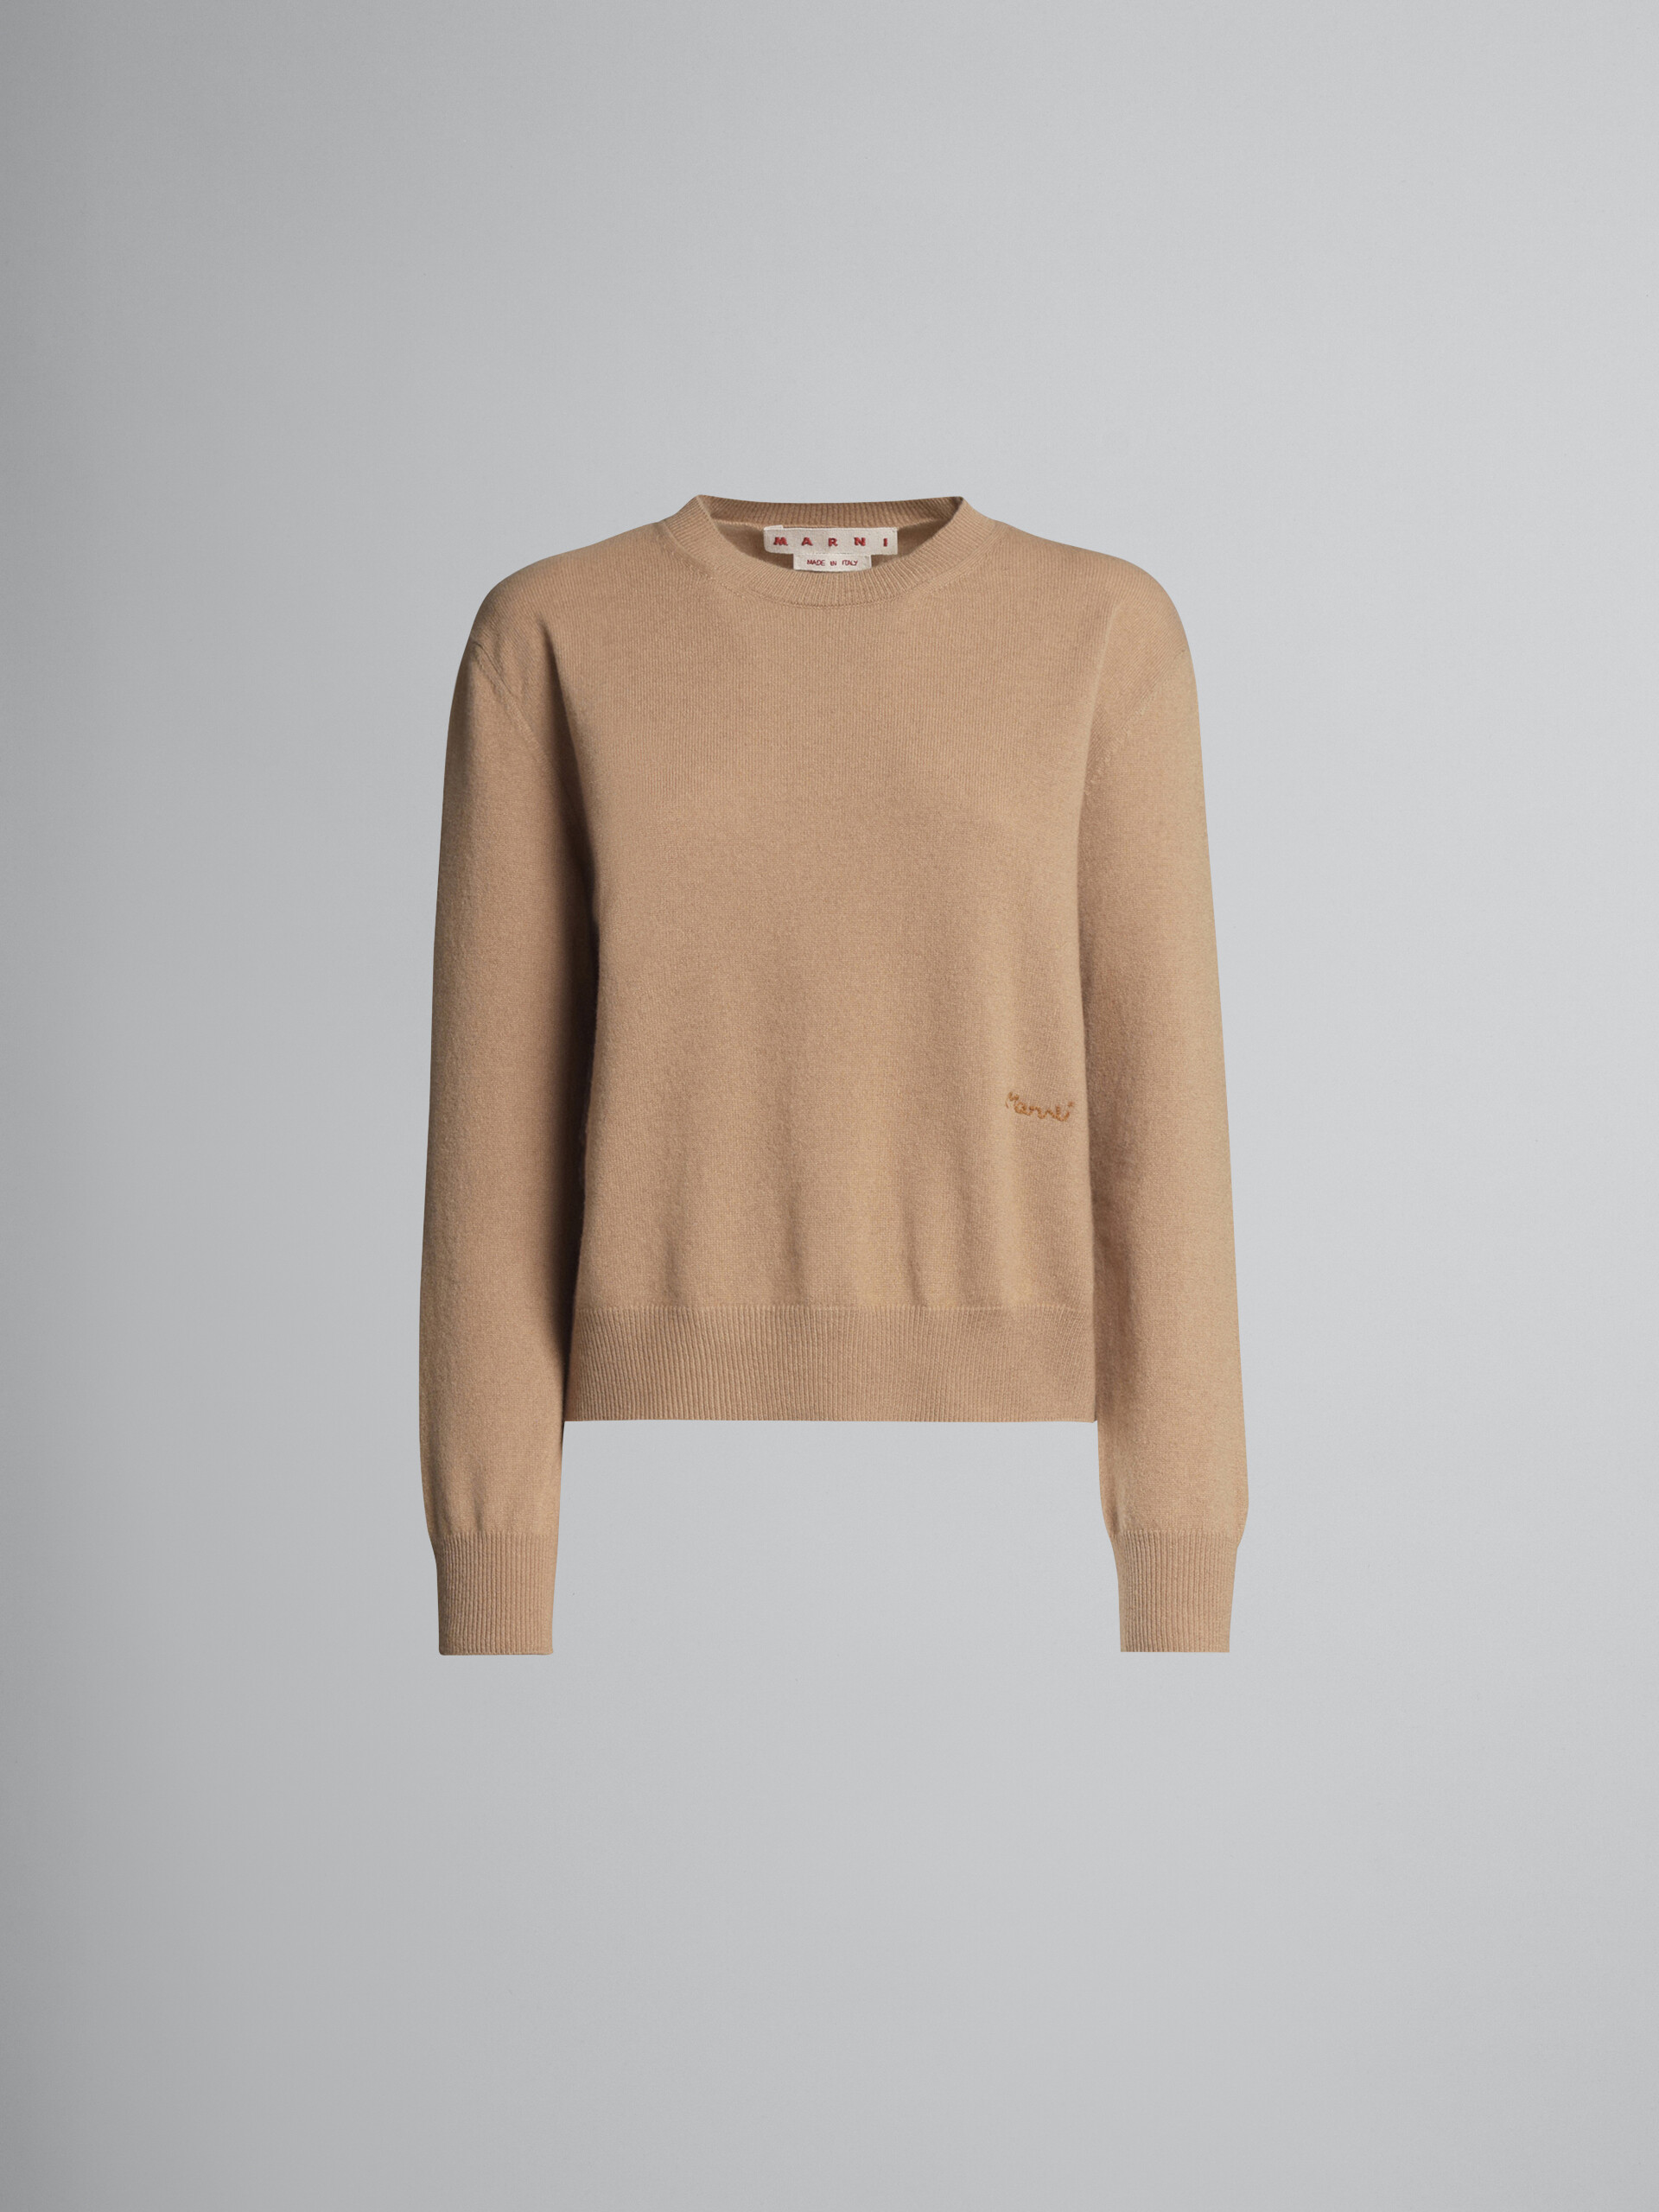 Beige logo cashmere crewneck sweater - Pullovers - Image 1